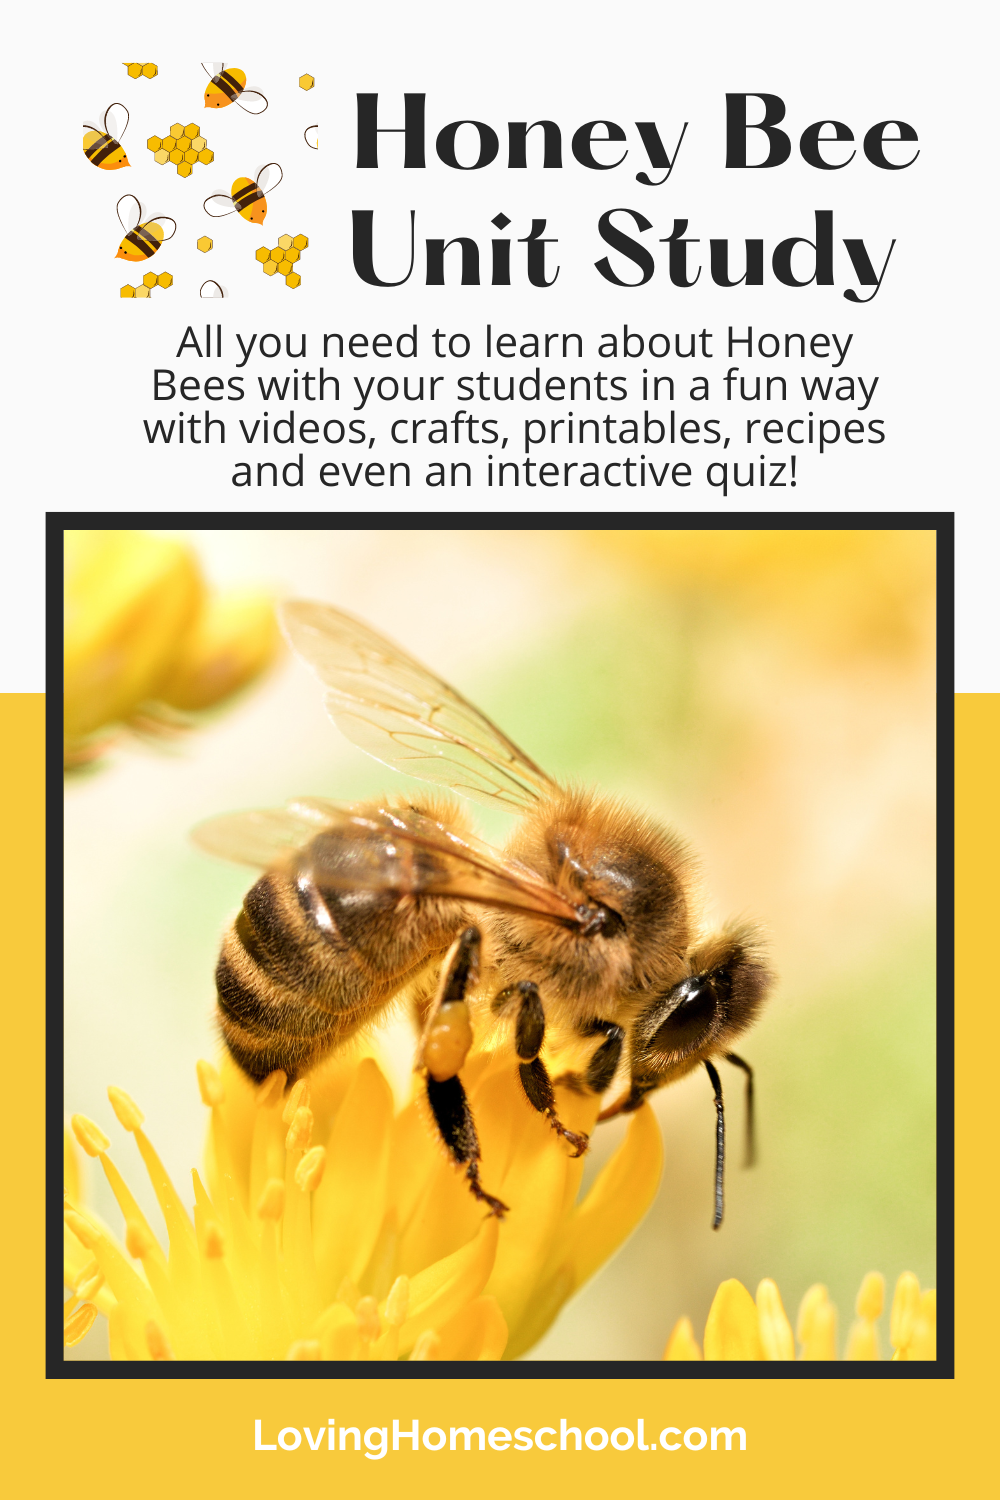 English Bumble Bee, Bees!, Pinterest